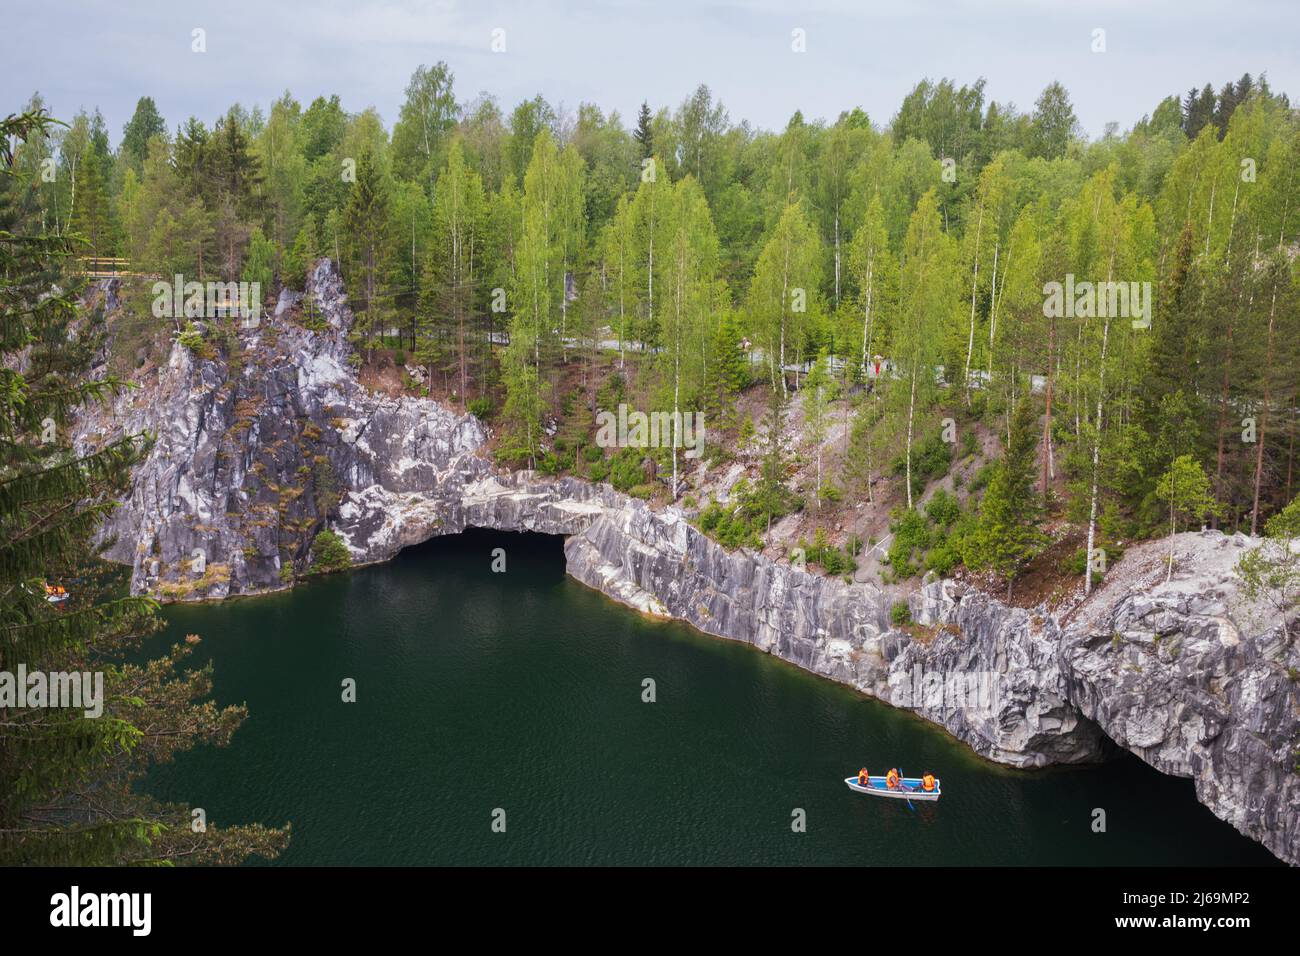 Karelia paisaje con turistas en barco navegando la antigua cantera de mármol llena de aguas subterráneas. Ruskeala, Rusia Foto de stock